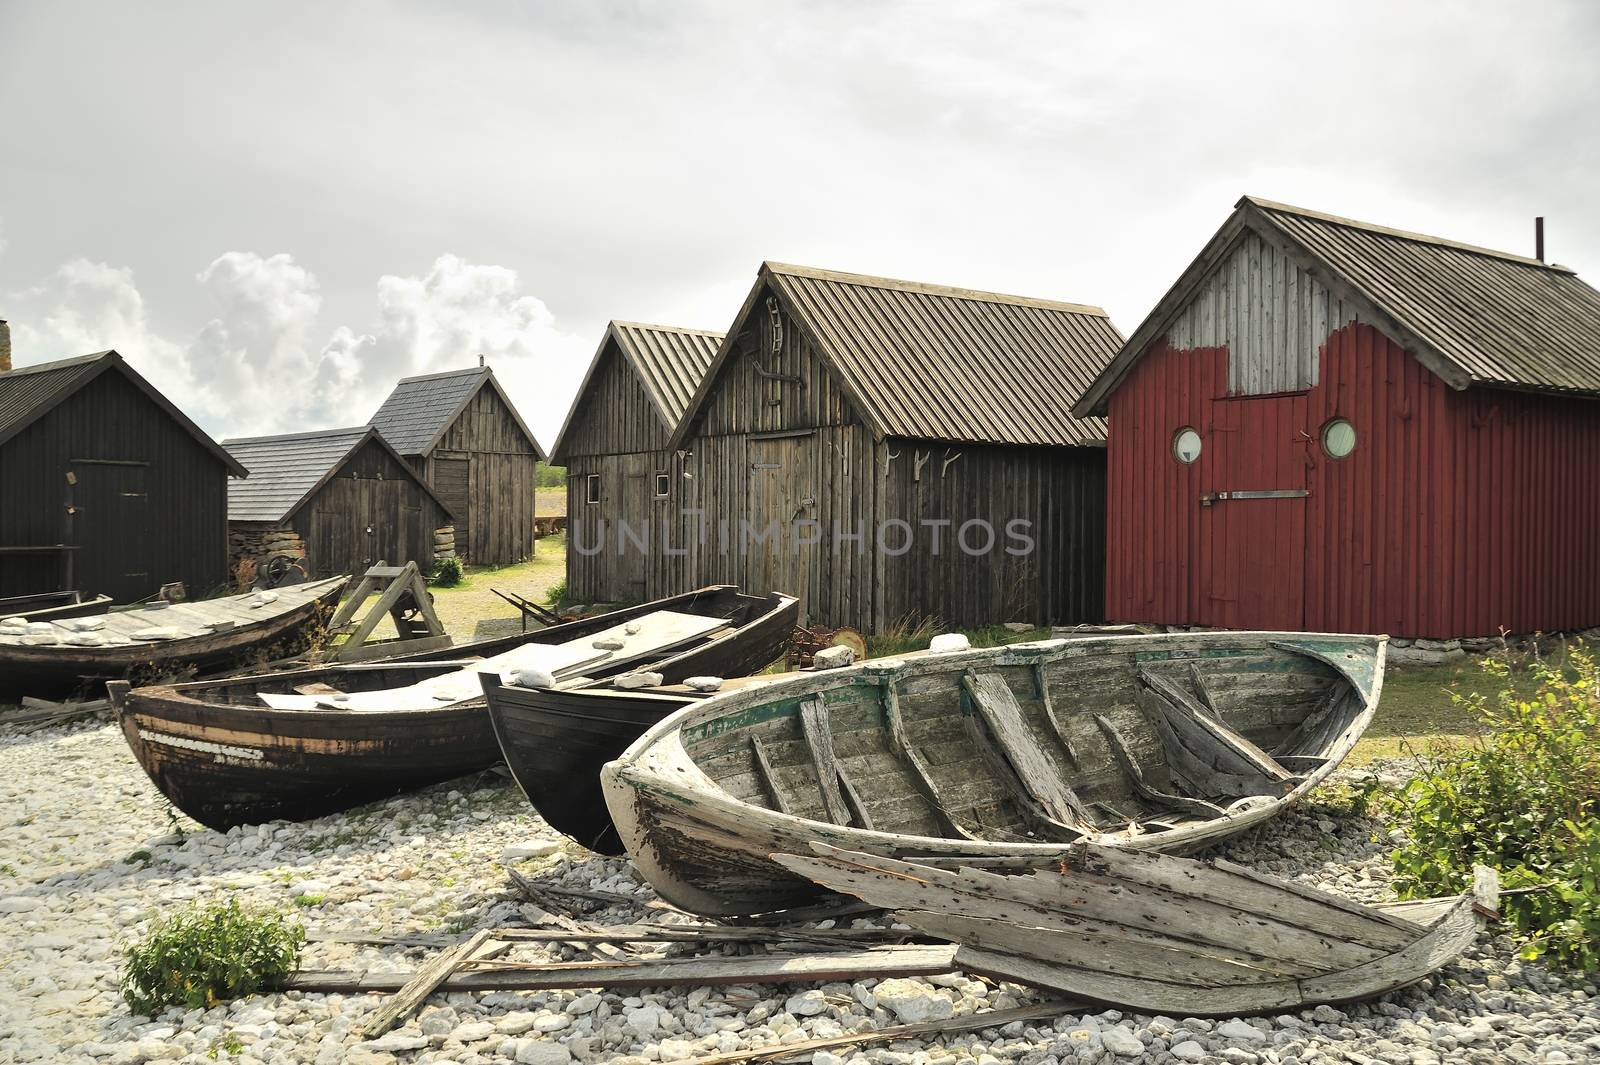 Fishing village in Fårö, Gotland, Sweden.